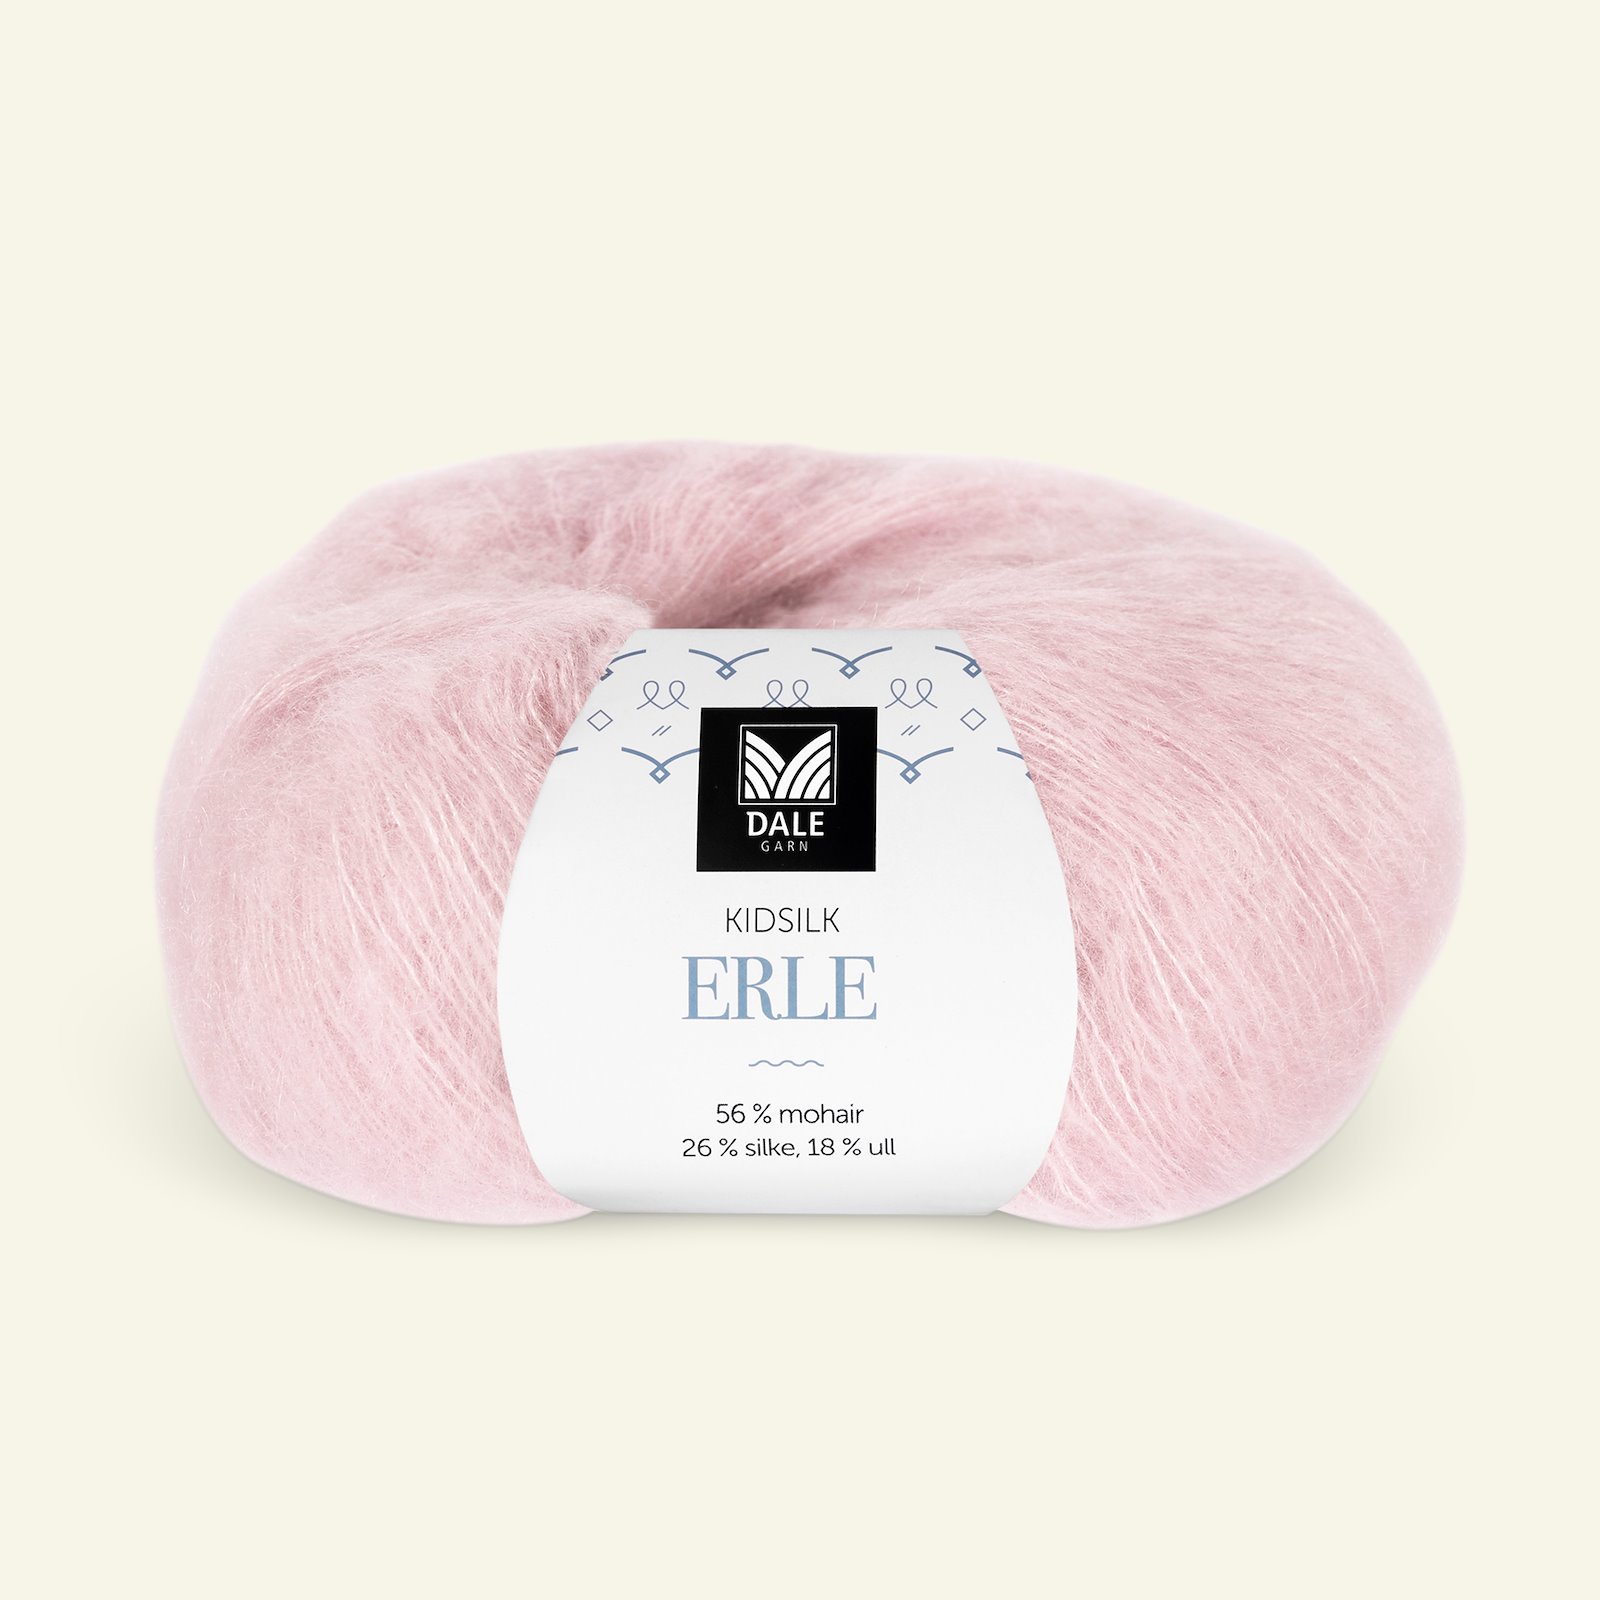 Dale Garn, silk mohair wool yarn "Kidsilk Erle", petrol (4203) 90000781_pack